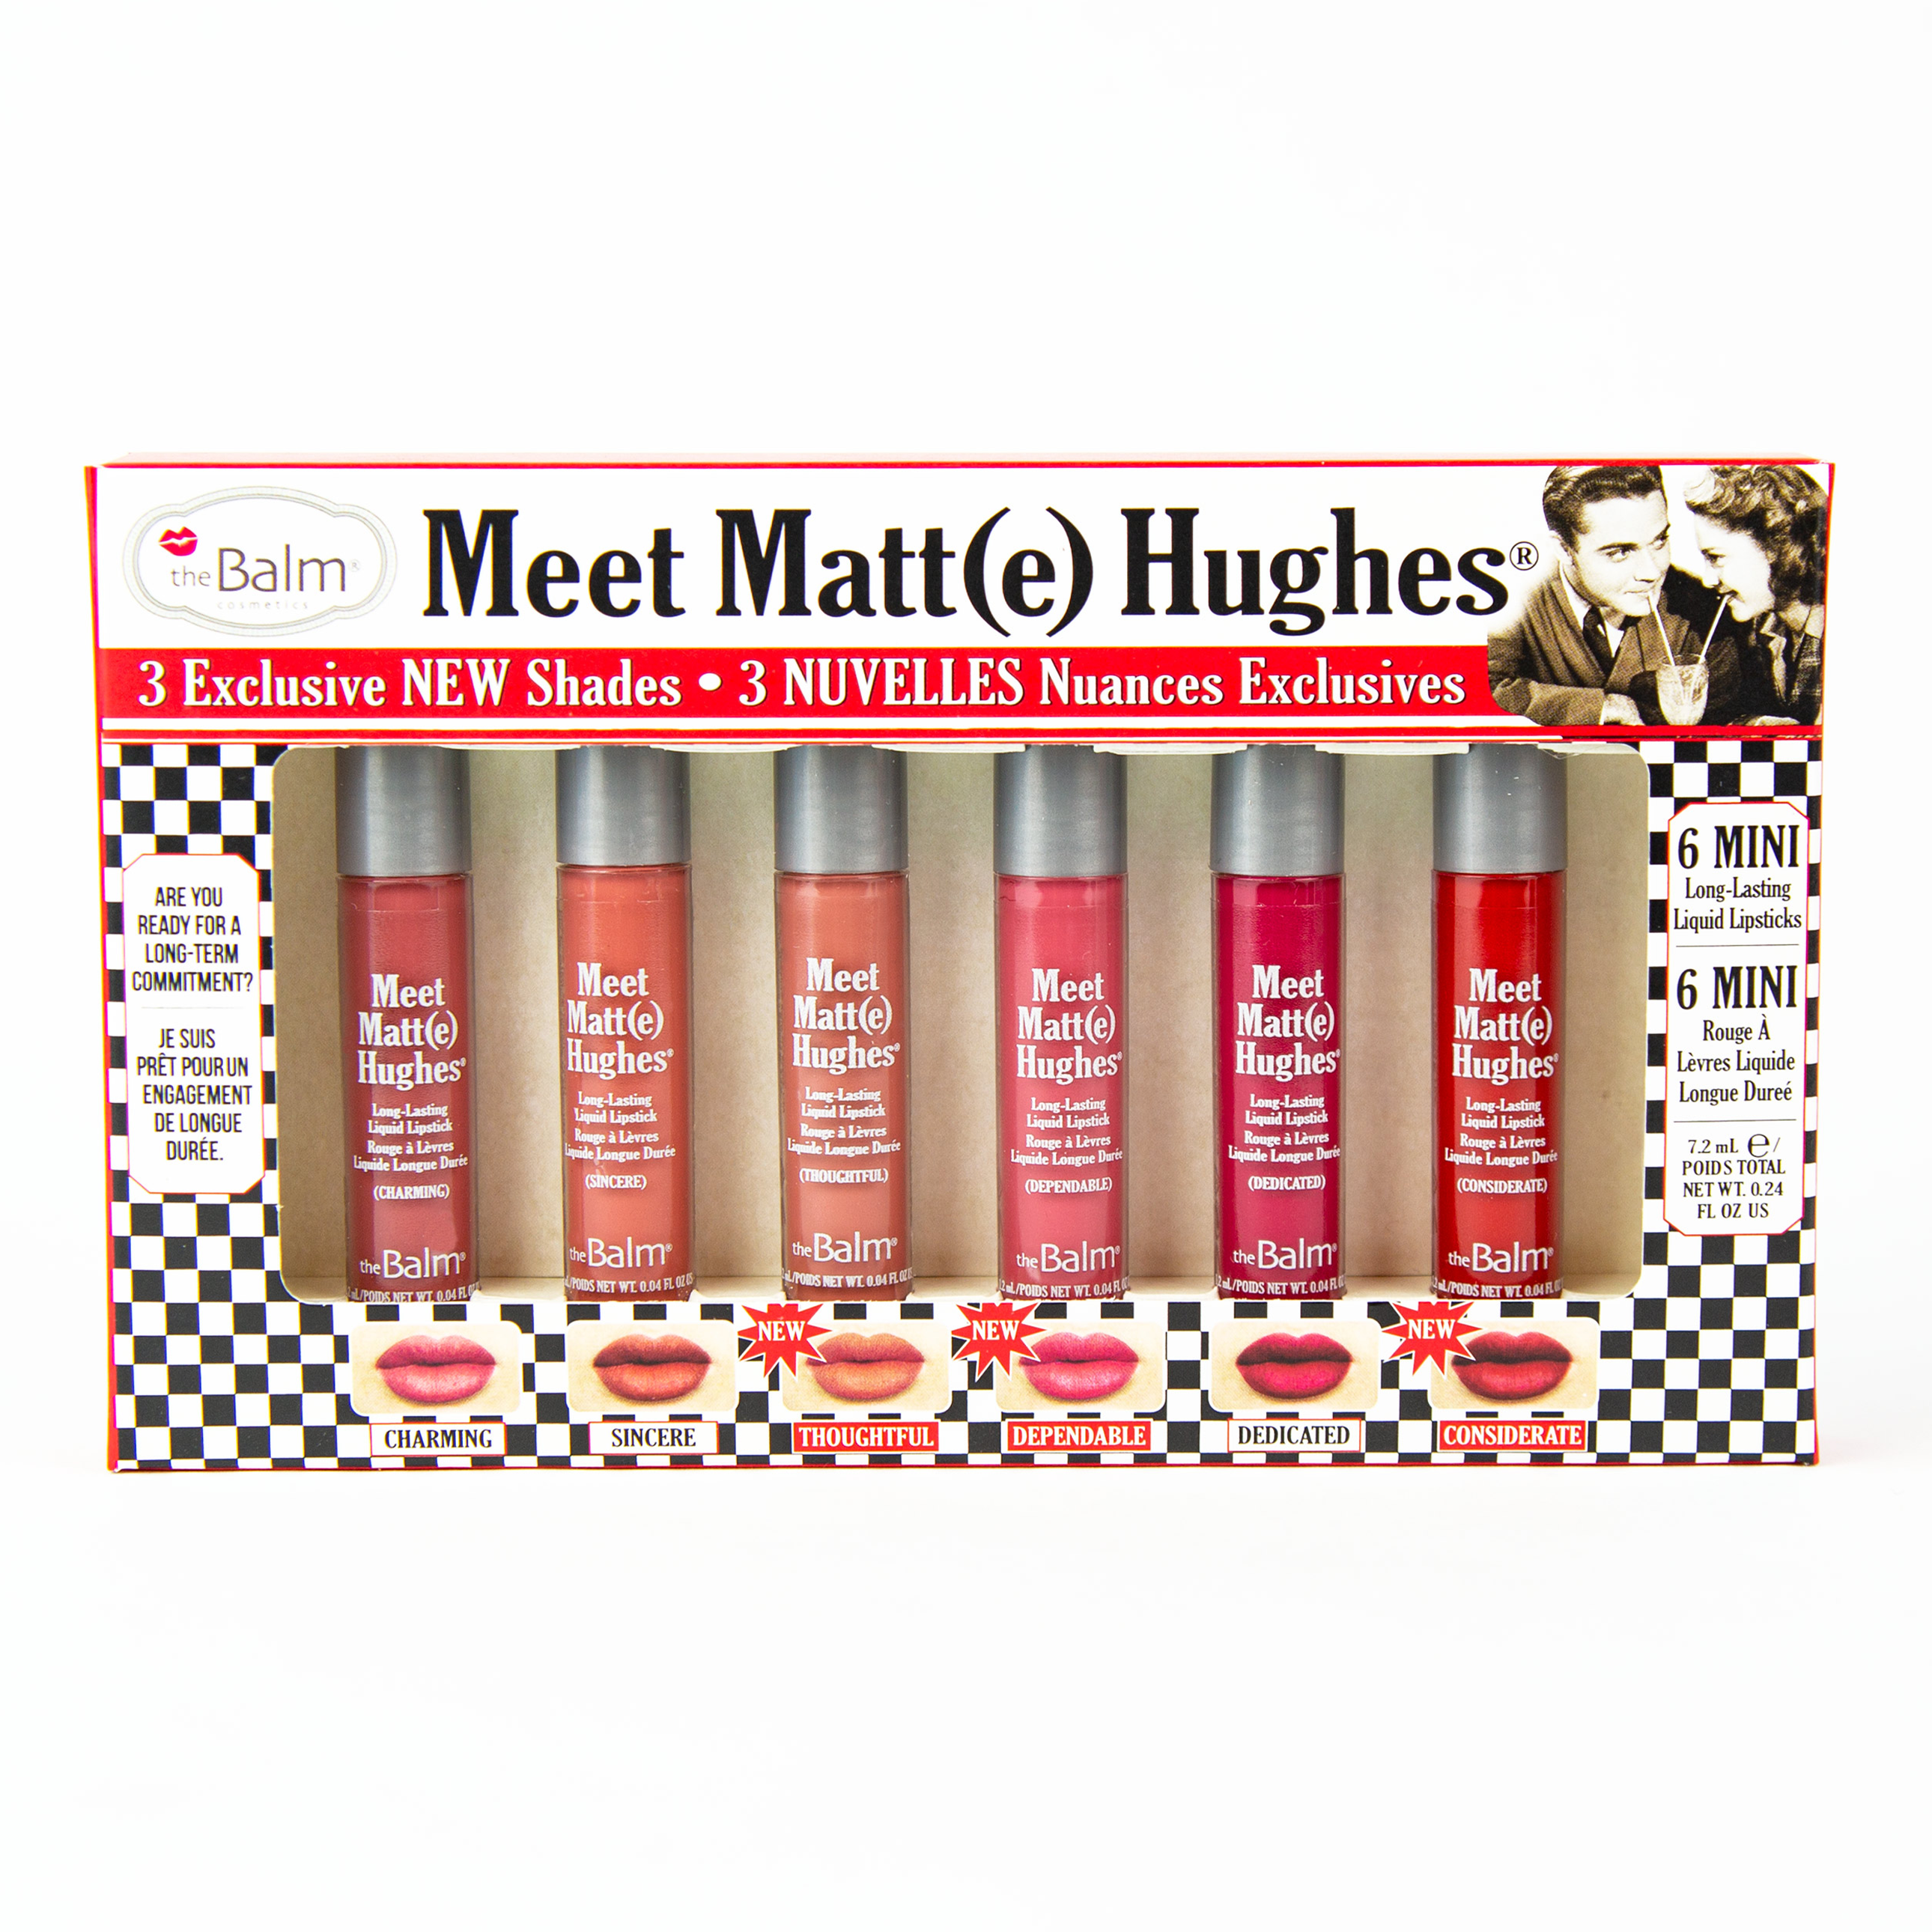 Thebalm Meet Matt(e) Hughes 6 Mini Liquid Lipsticks - Vol. 14